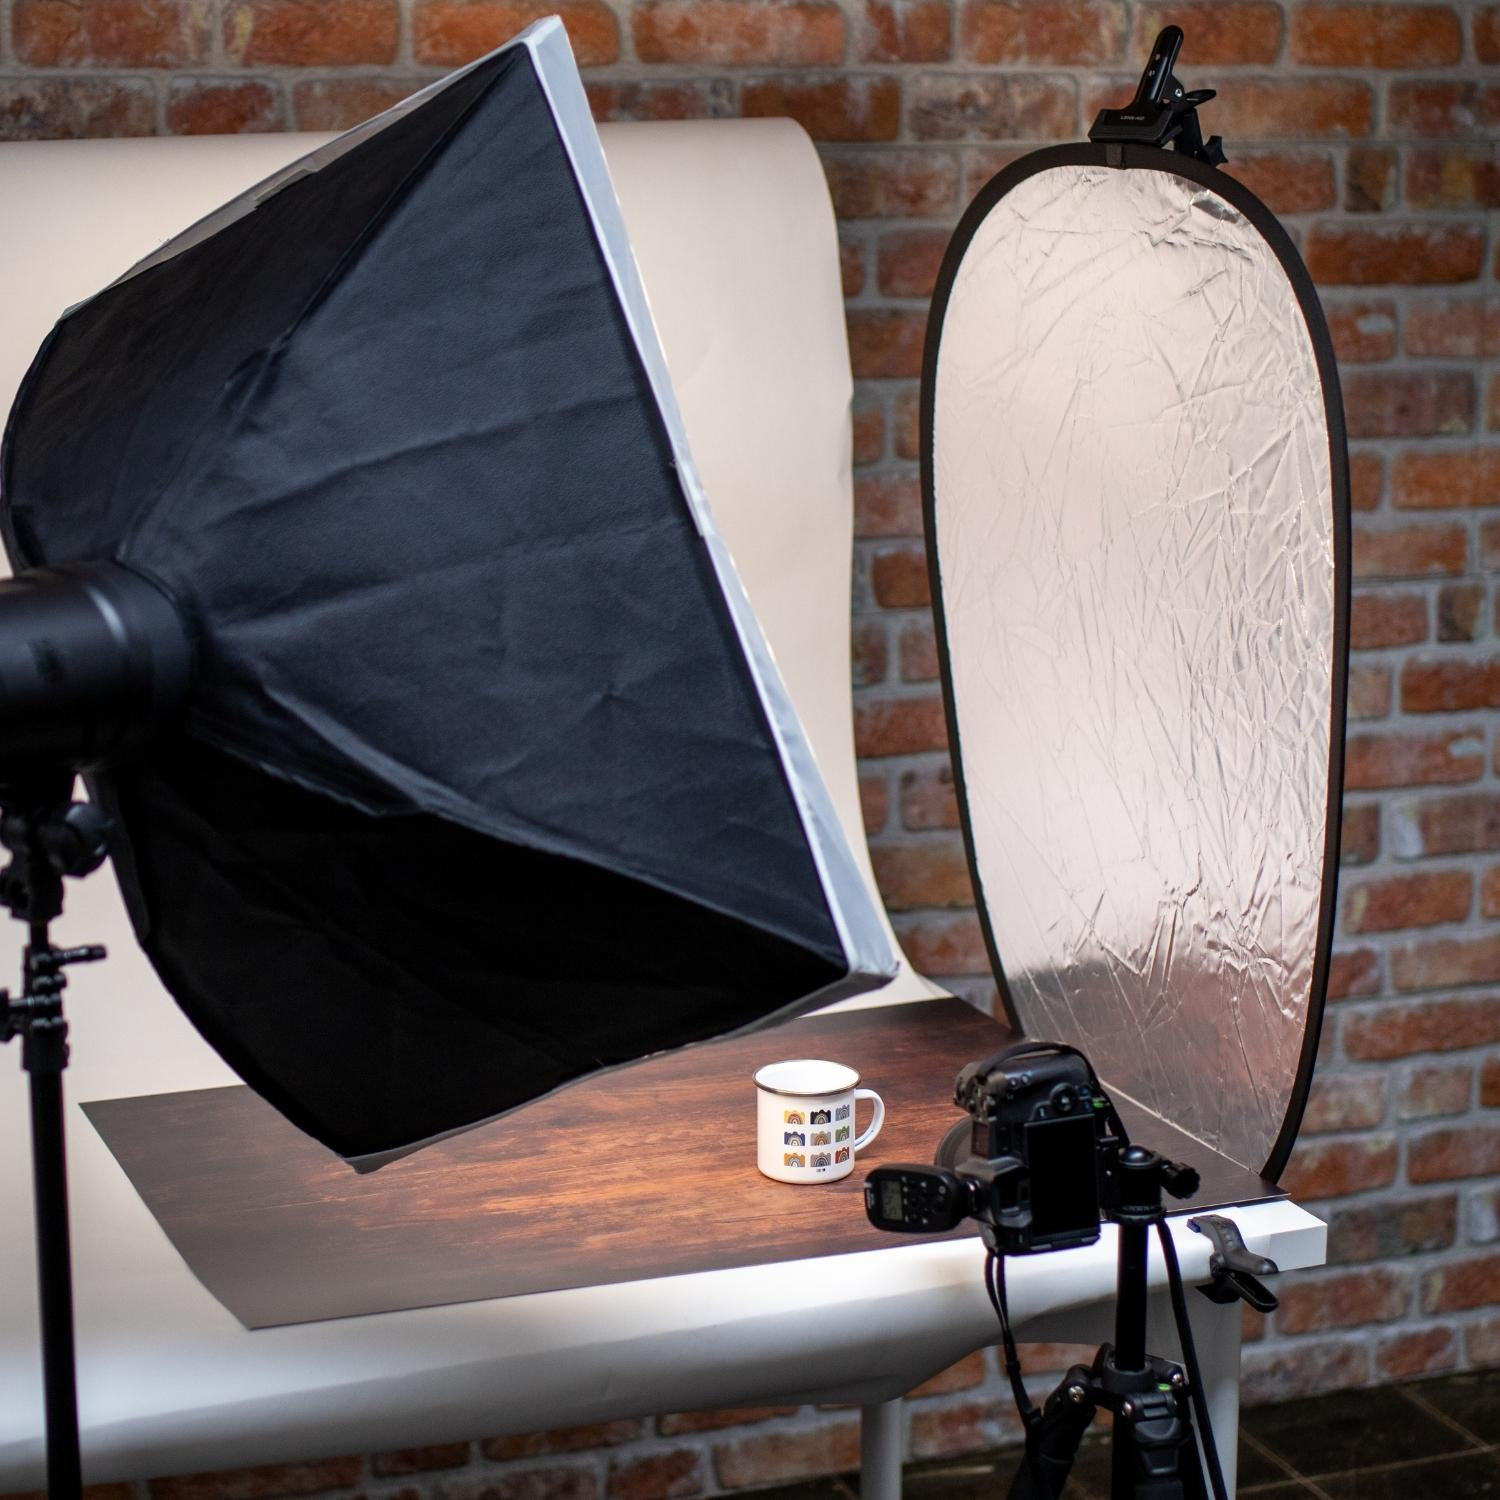 LENS-AID 60x90cm Reflektorklemme, passend Faltreflektor für Studiofotografie Fotostudio-Set, Mehrfarbig, inkl.